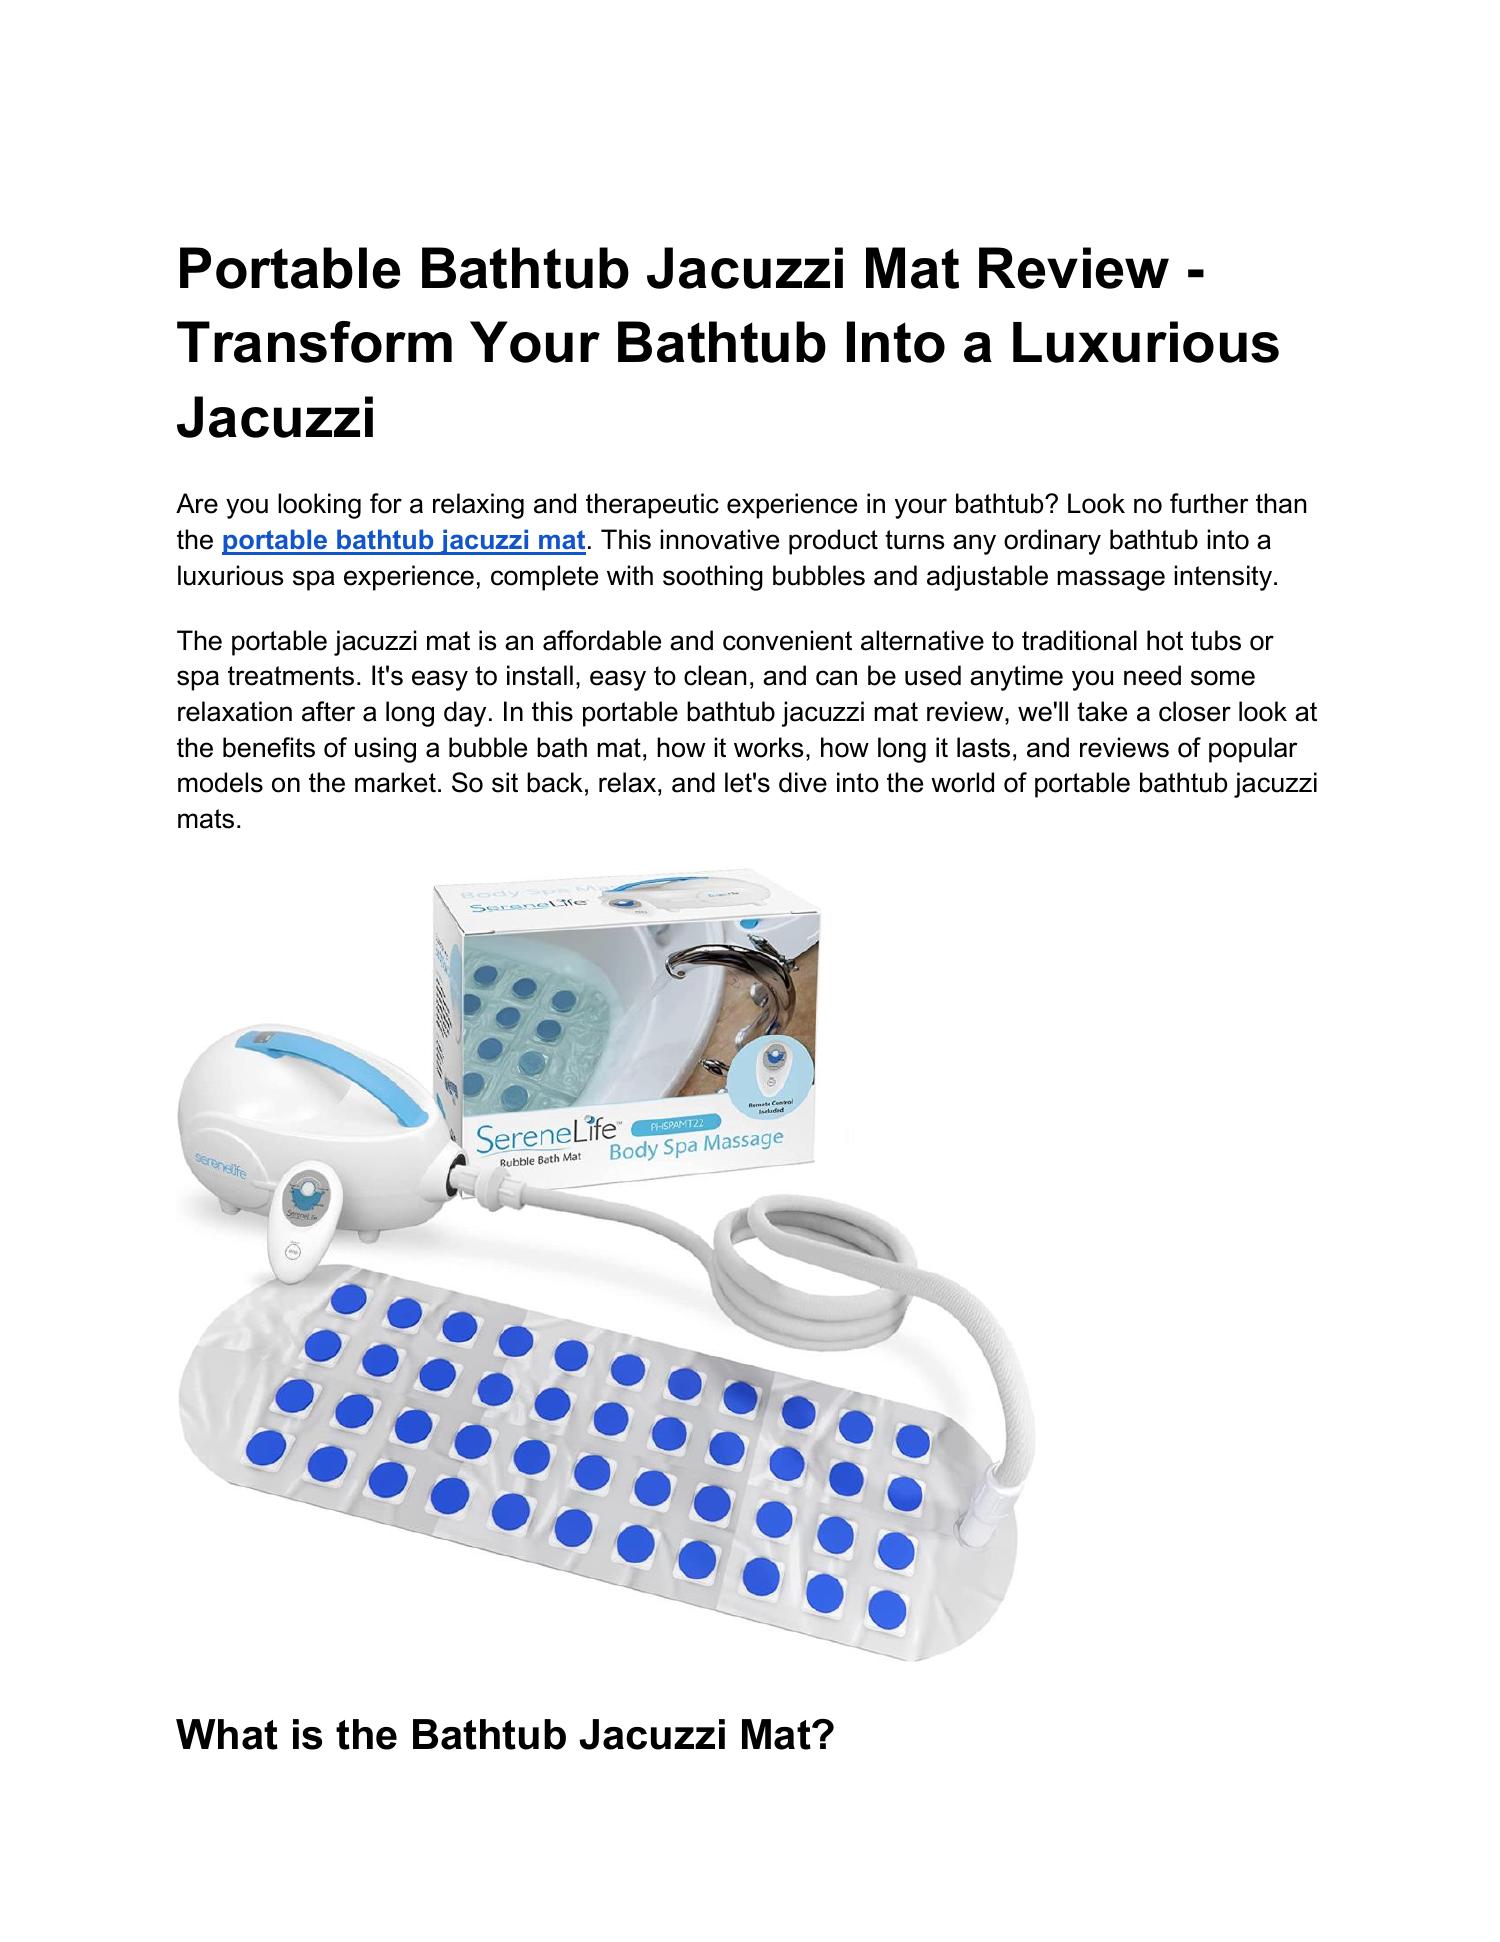 https://www.docdroid.com/file/view/teKn4So/portable-bathtub-jacuzzi-mat-review-transform-your-bathtub-into-a-luxurious-jacuzzi-docx.jpg